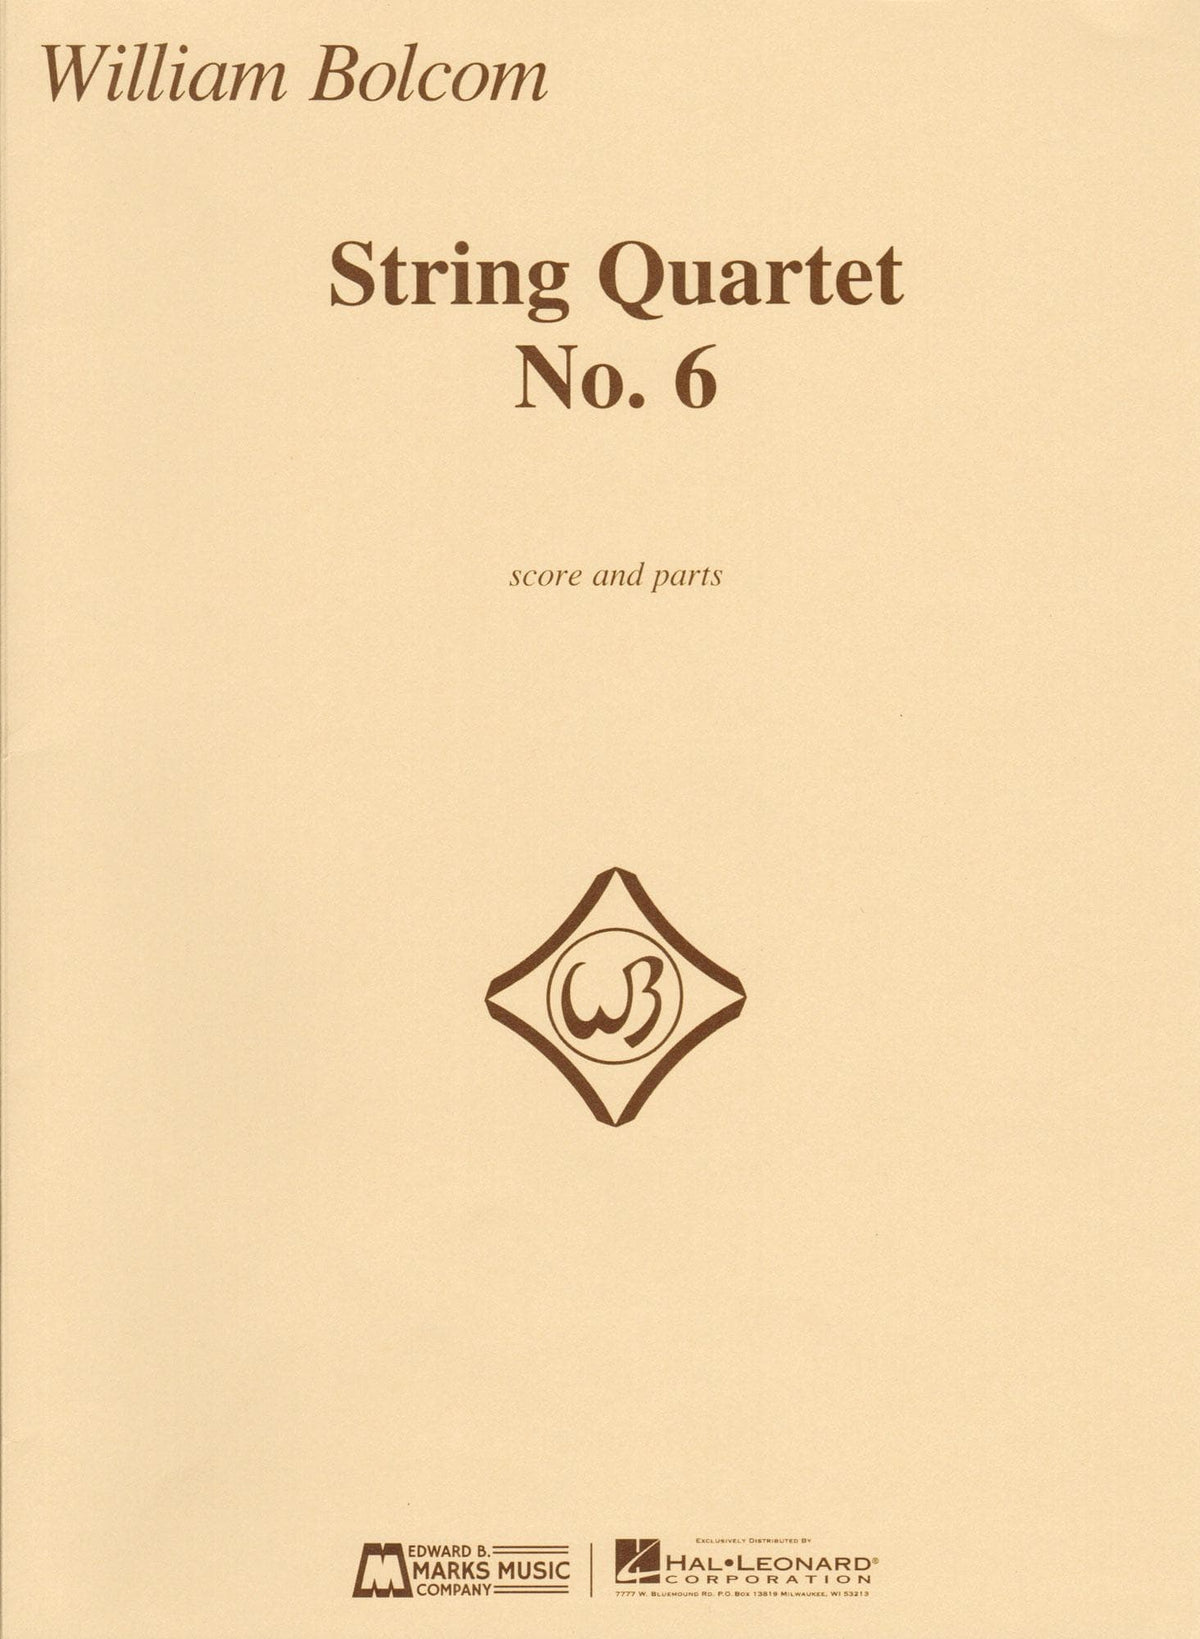 Bolcom, William - String Quartet No. 6 - Score and Parts - Edward B. Marks Music Company